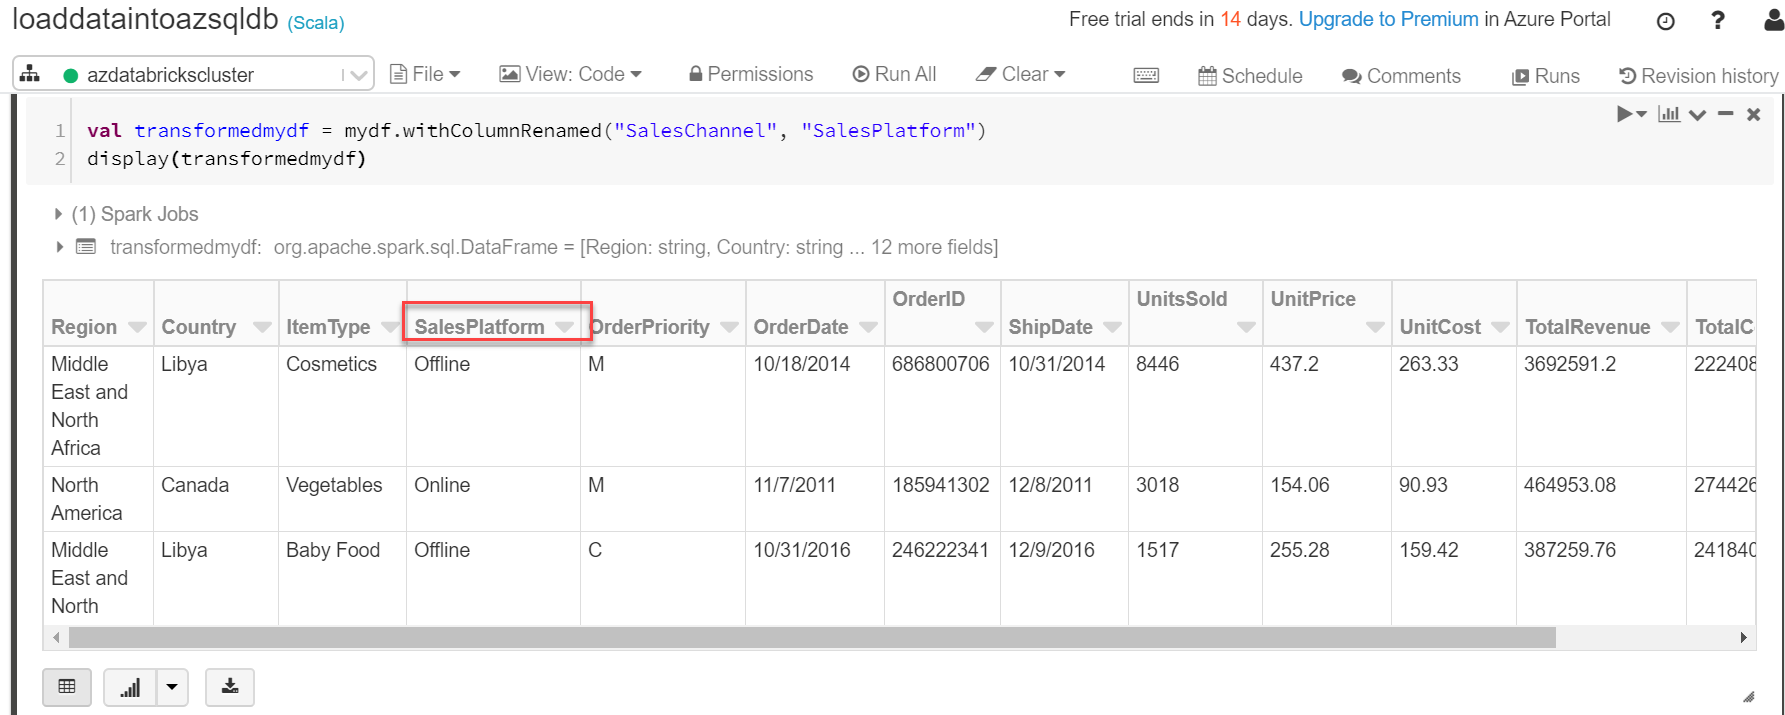 Loading data into SQL Database using Scala notebook from Databricks on Azure plaform 3/10